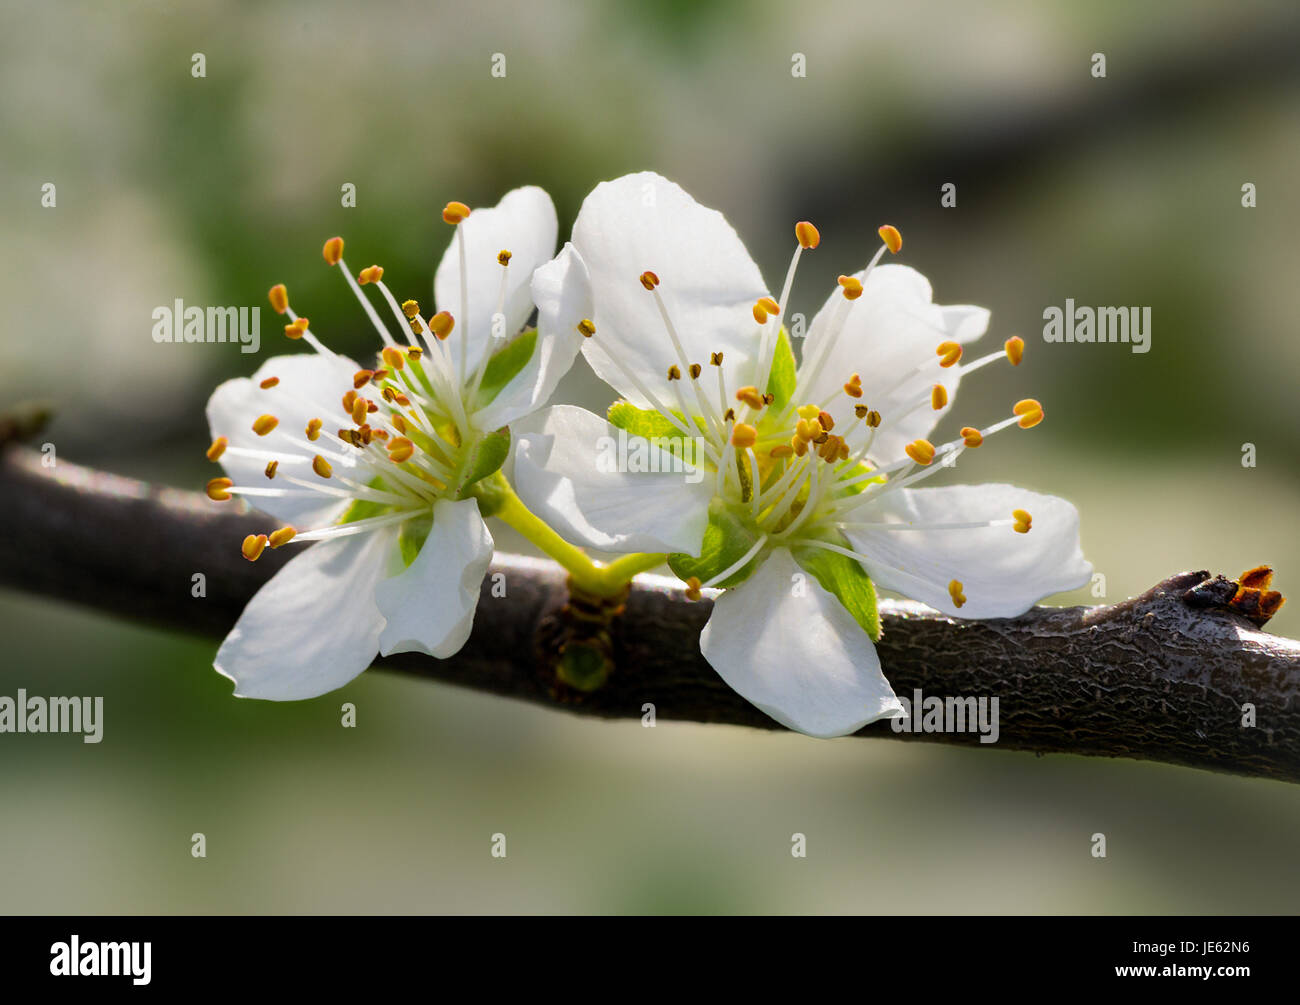 Plum blossoms Stock Photo